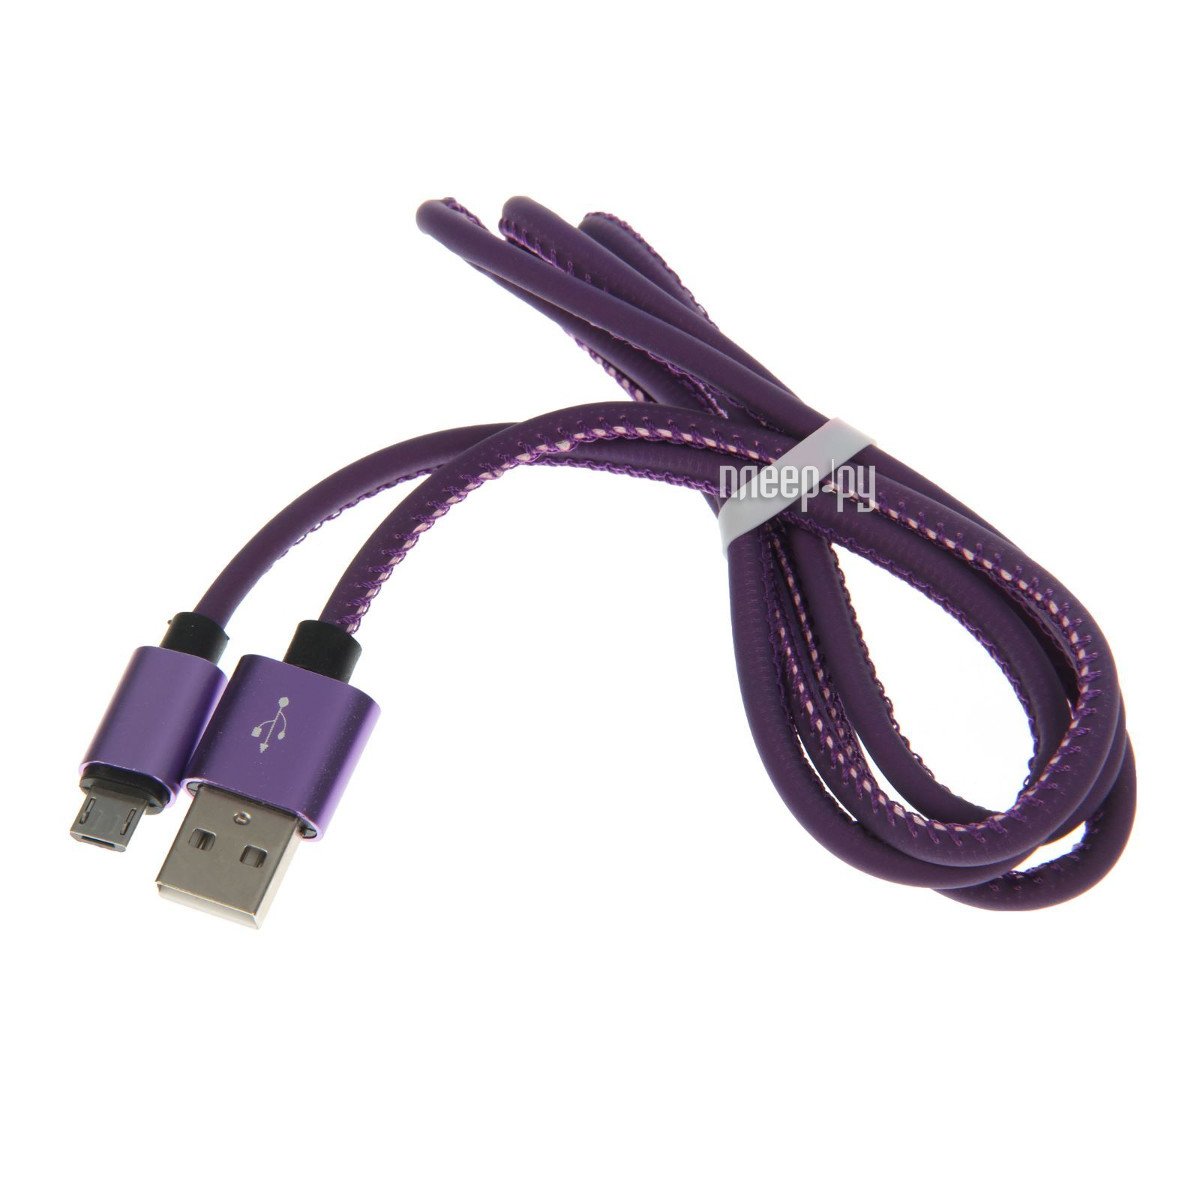  Luazon USB - microUSB Violet-Pink 2541700  365 